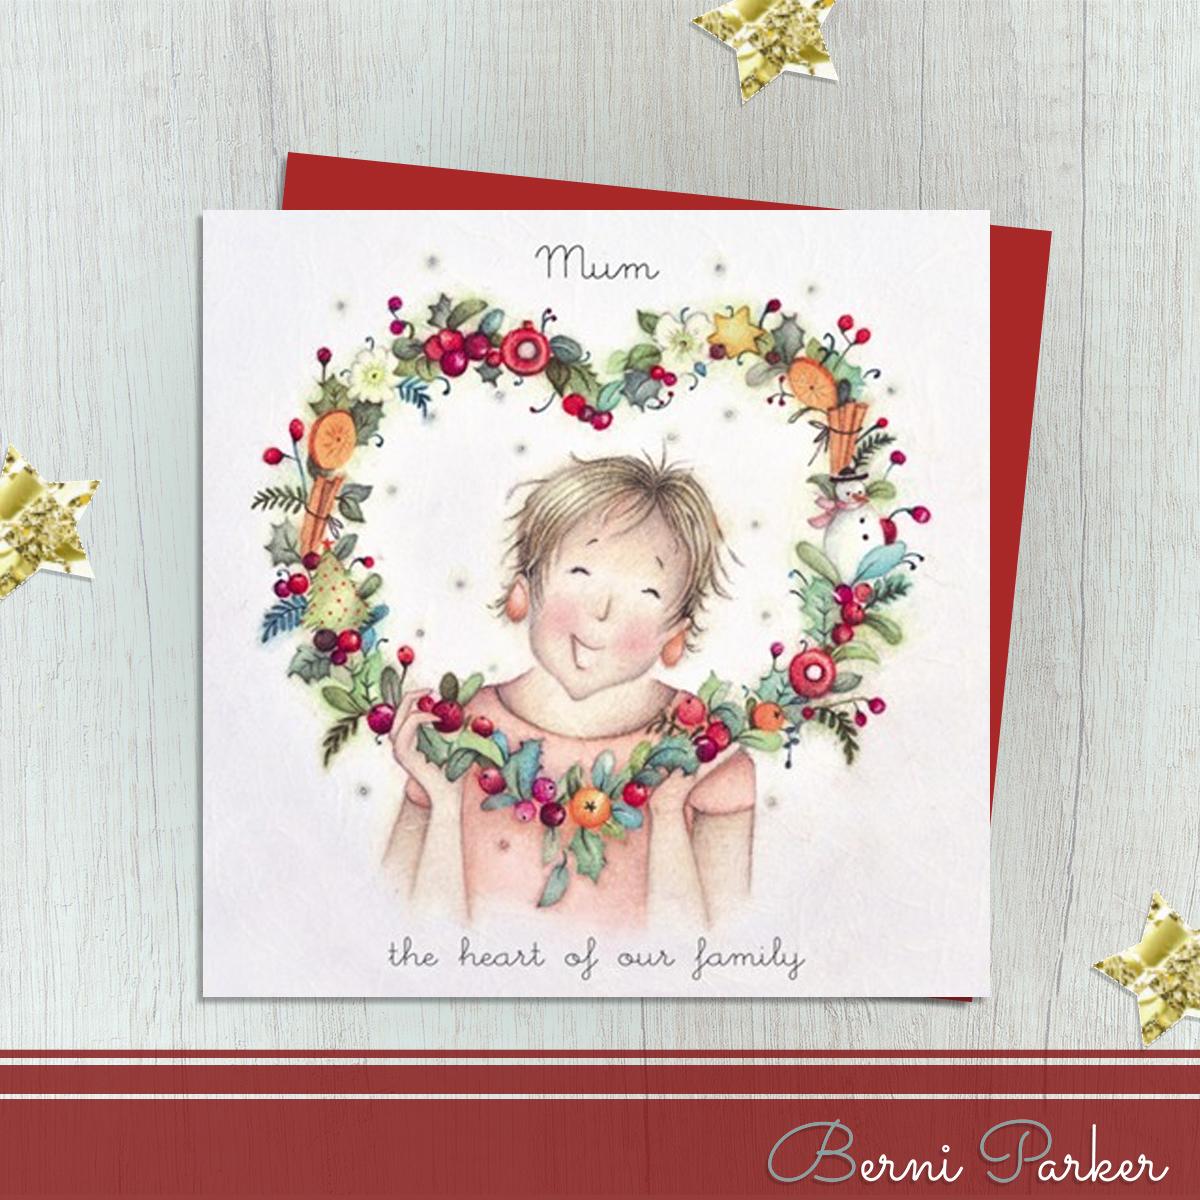 Mum Berni Parker Christmas Card Alongside Its Red Envelope